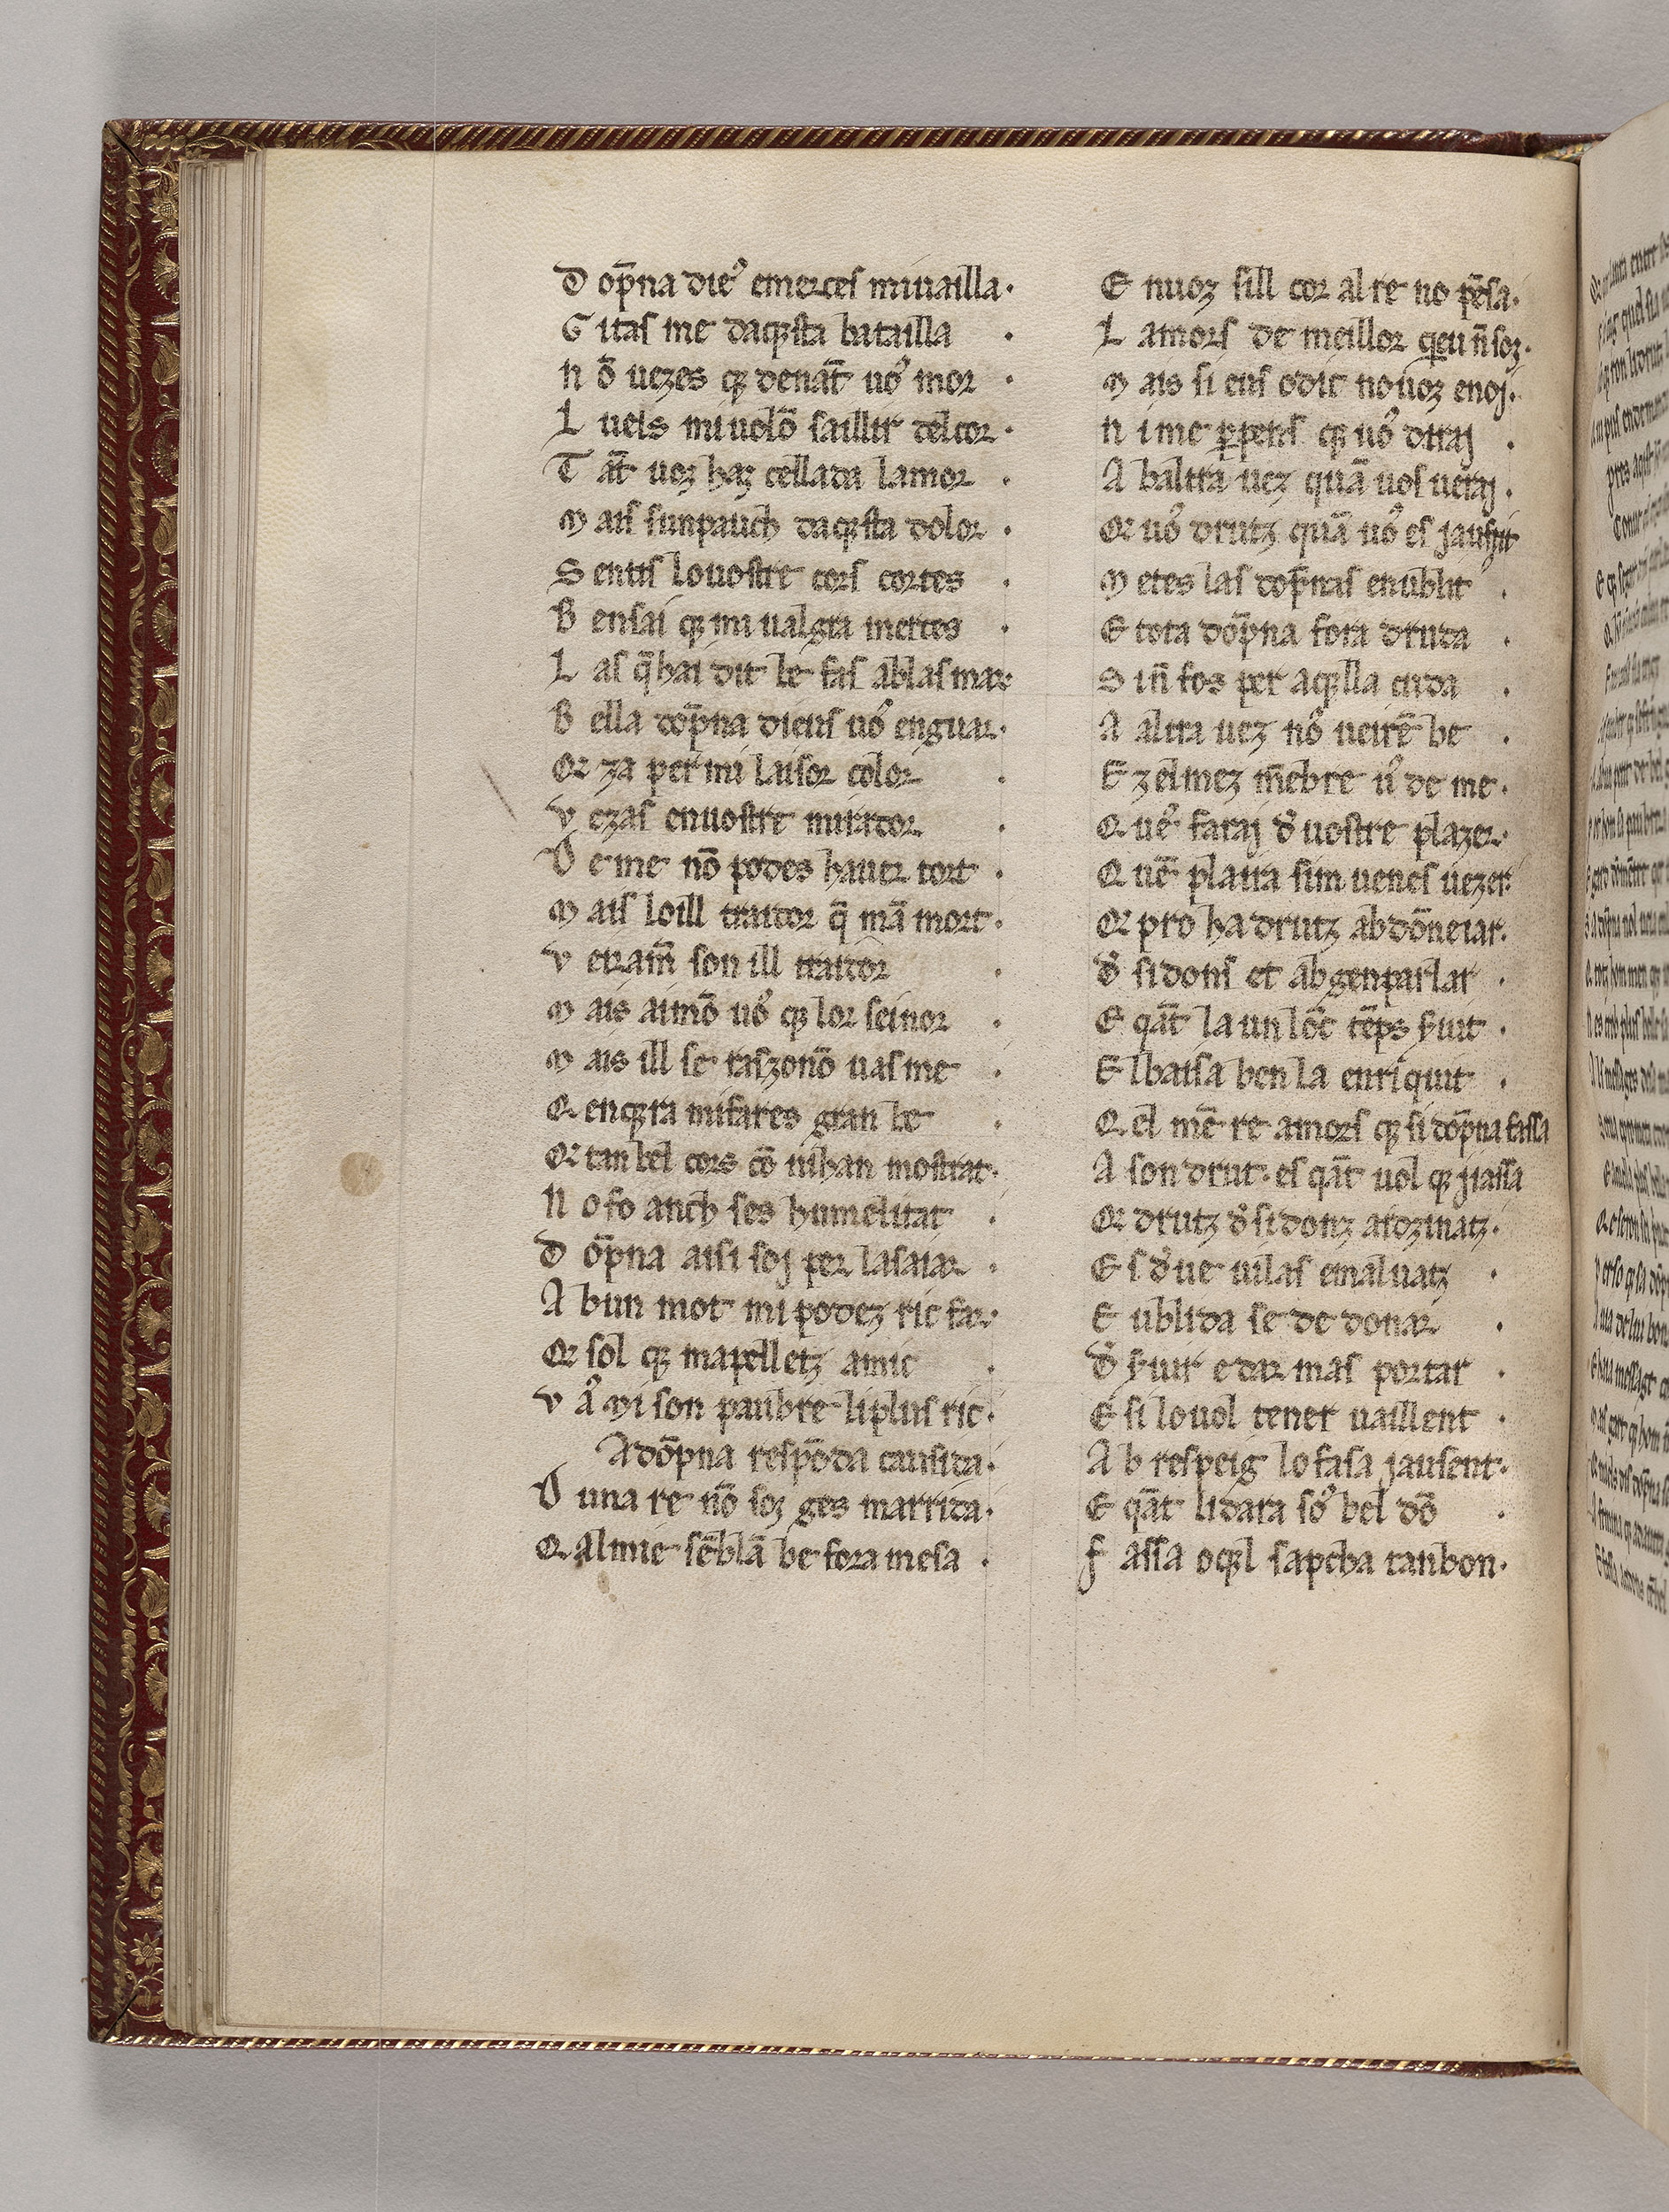 222, MS M.819, fol. 108v, Chansonnier provençal (MS M.819)